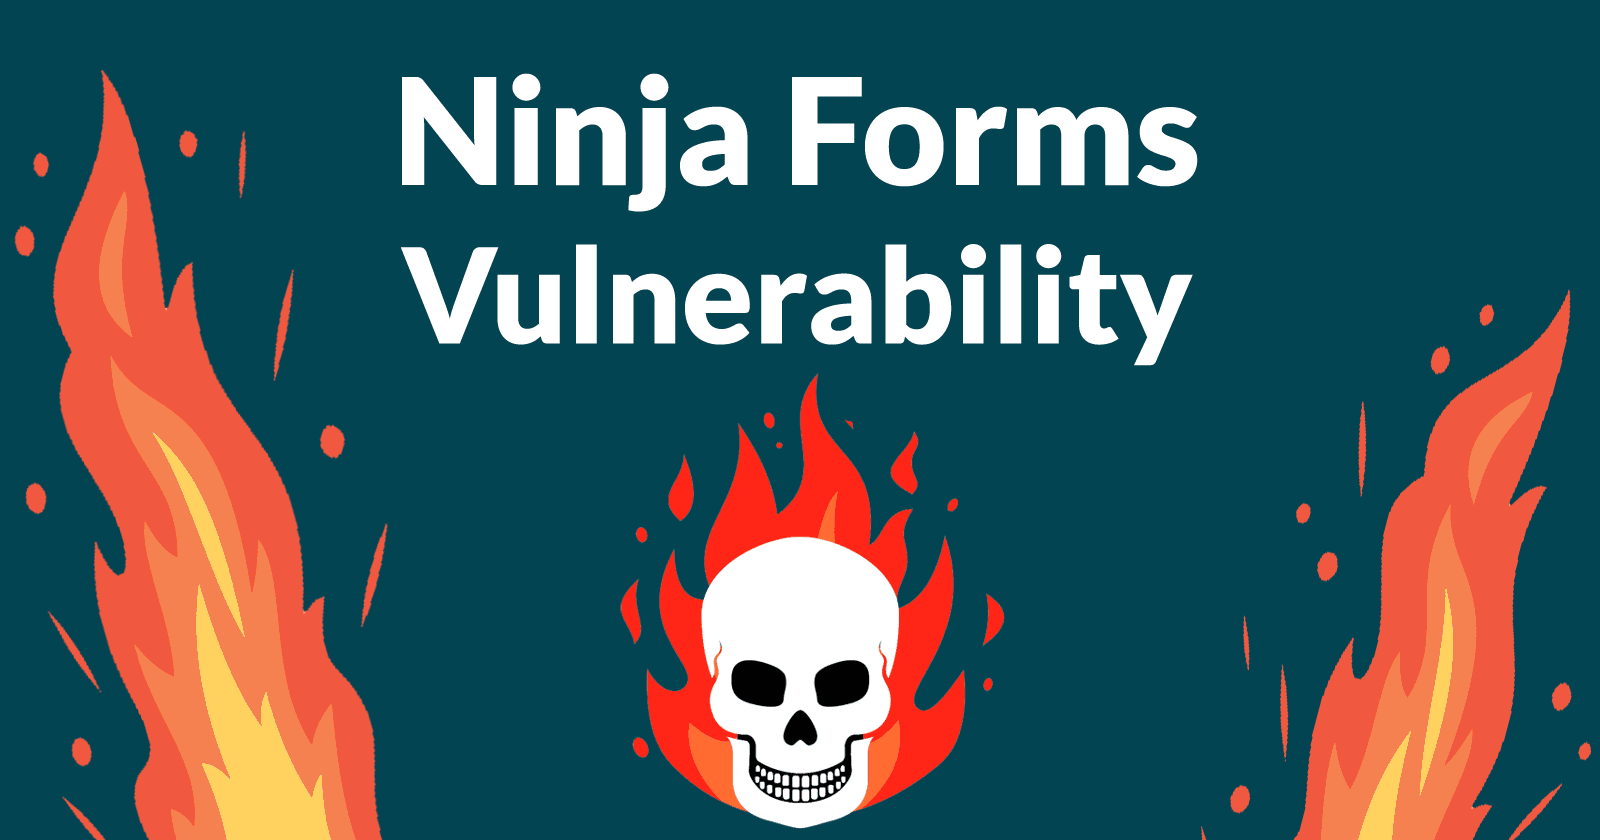 ninja-forms-vulnerability-5eab27dab132f.png